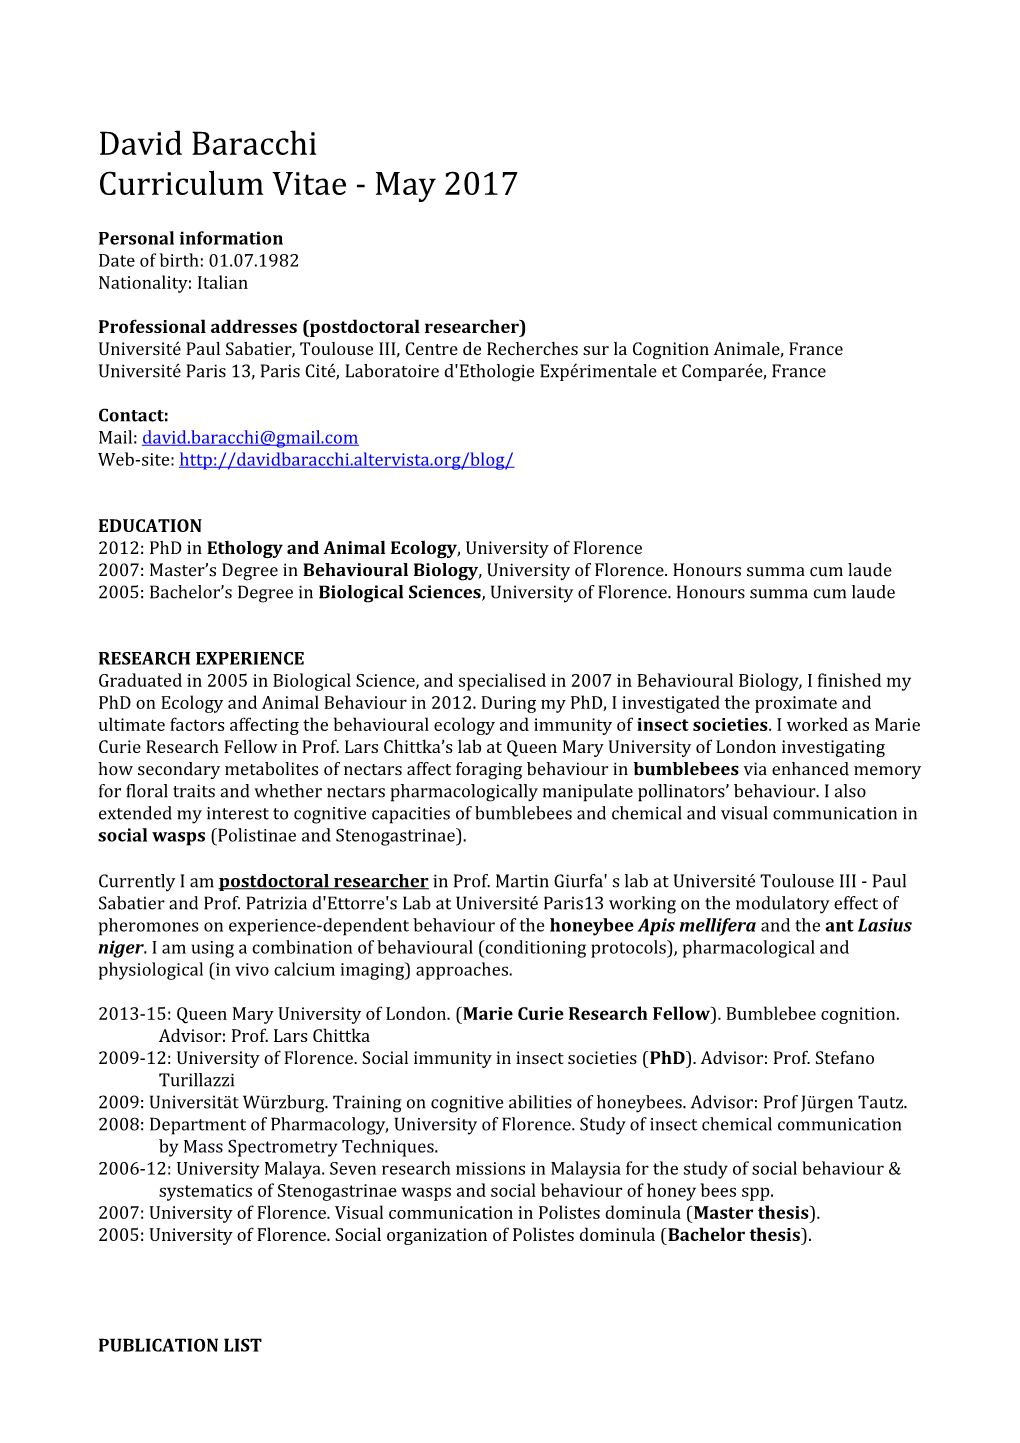 Professional Addresses (Postdoctoral Researcher)